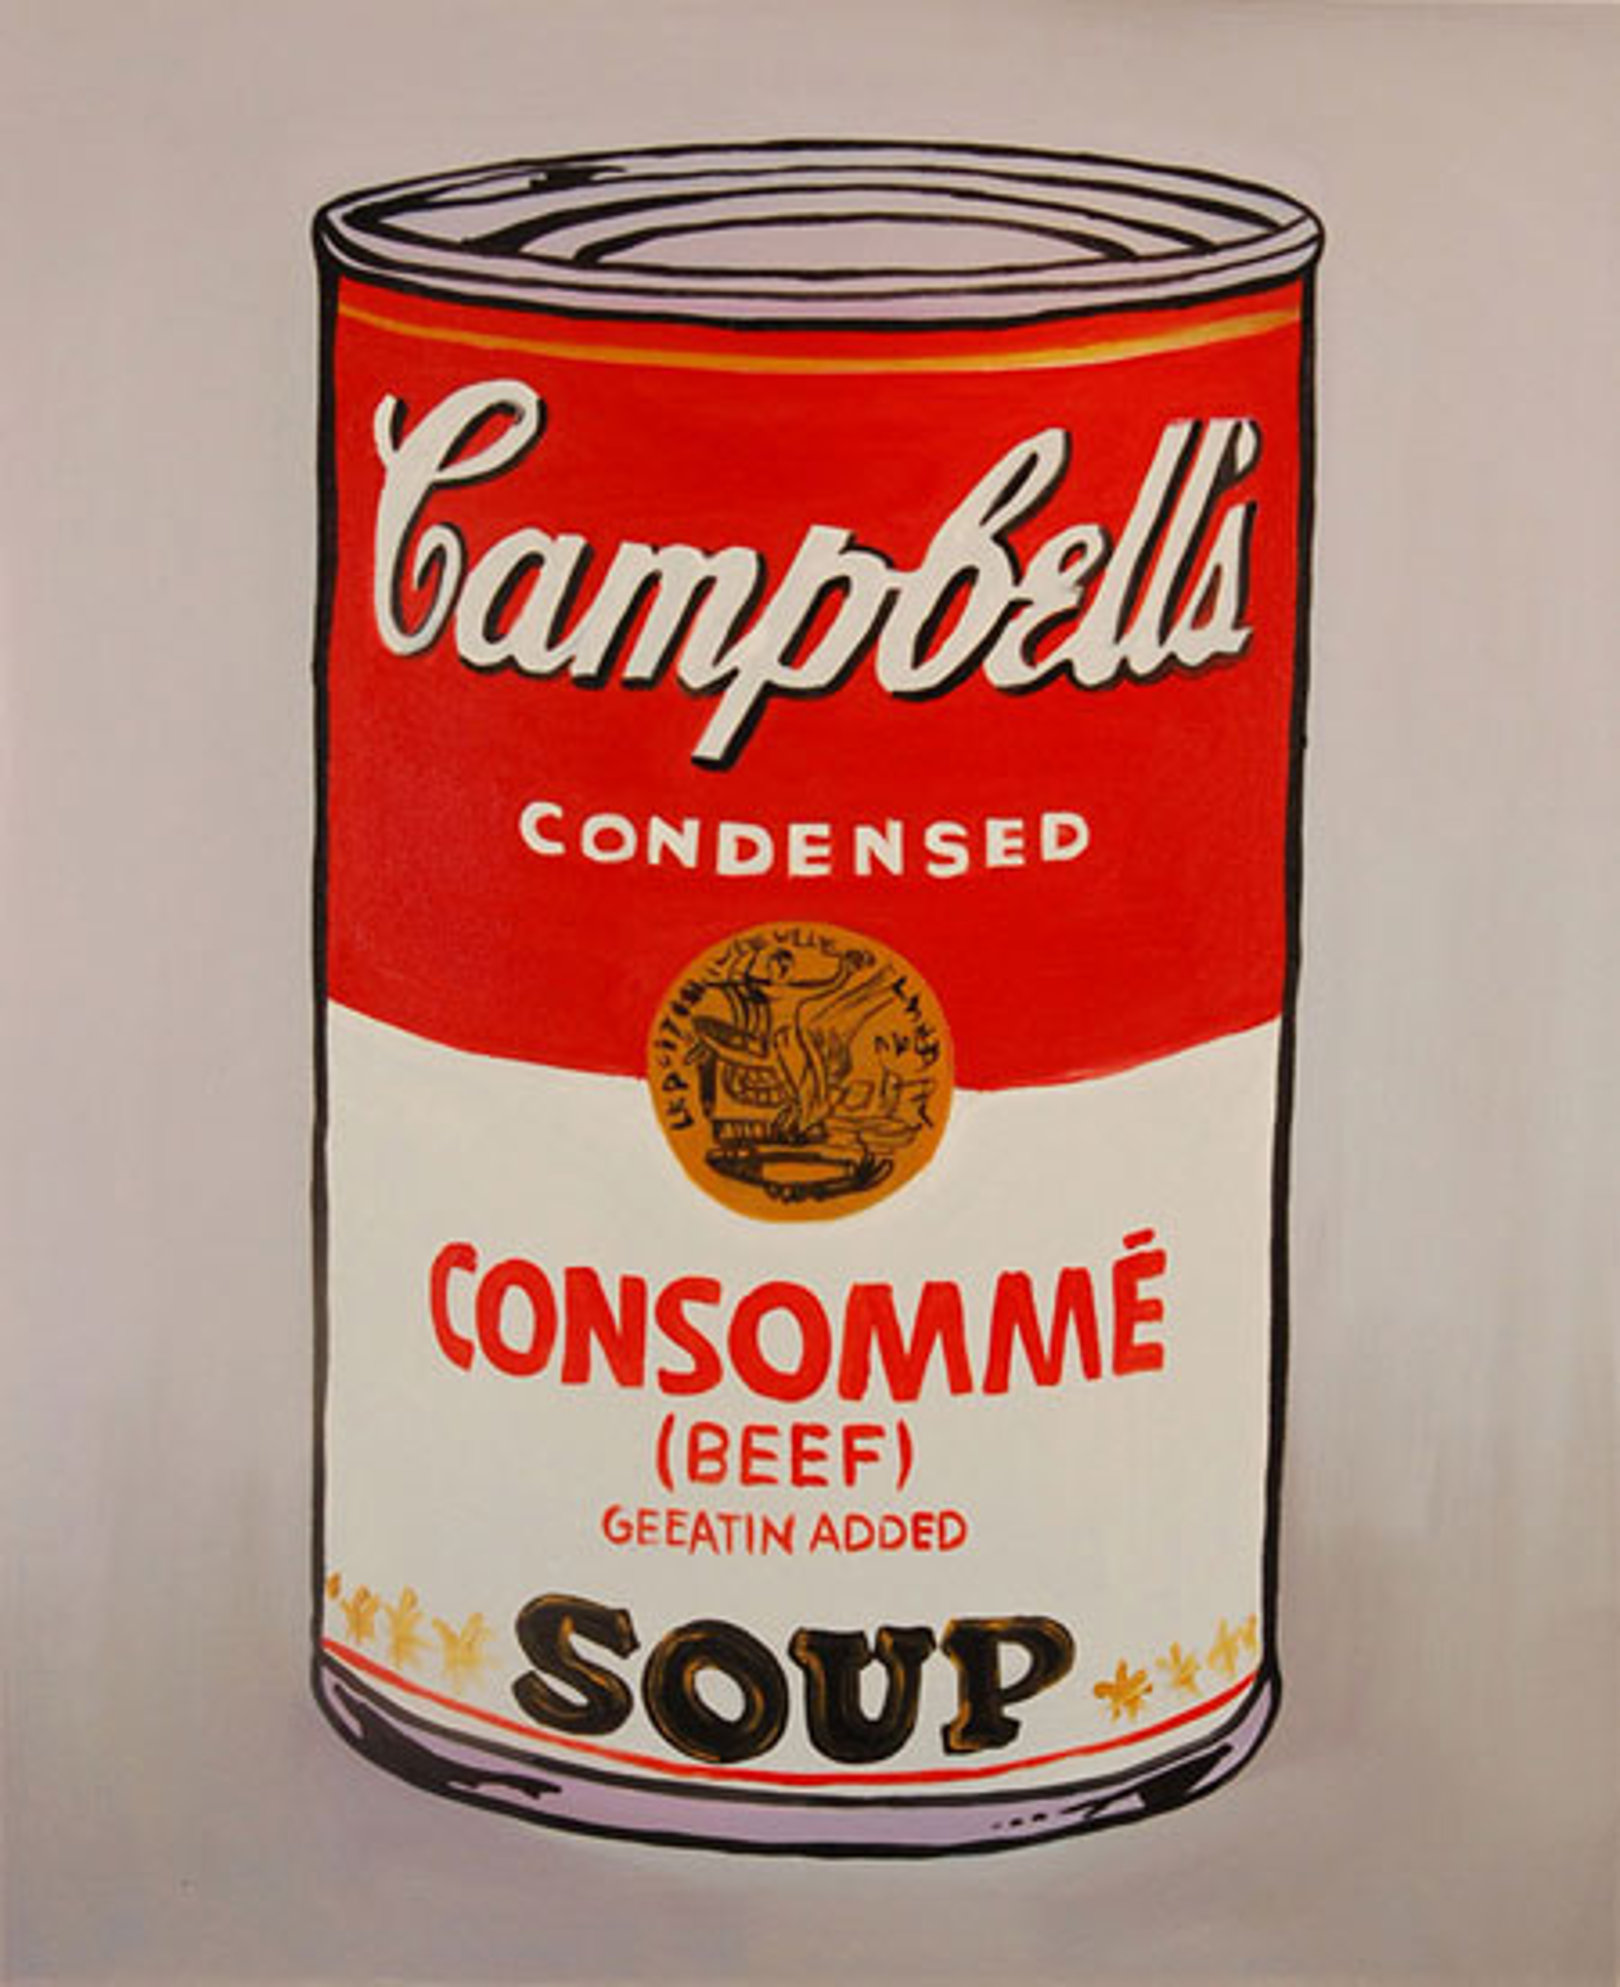 Consomme soup